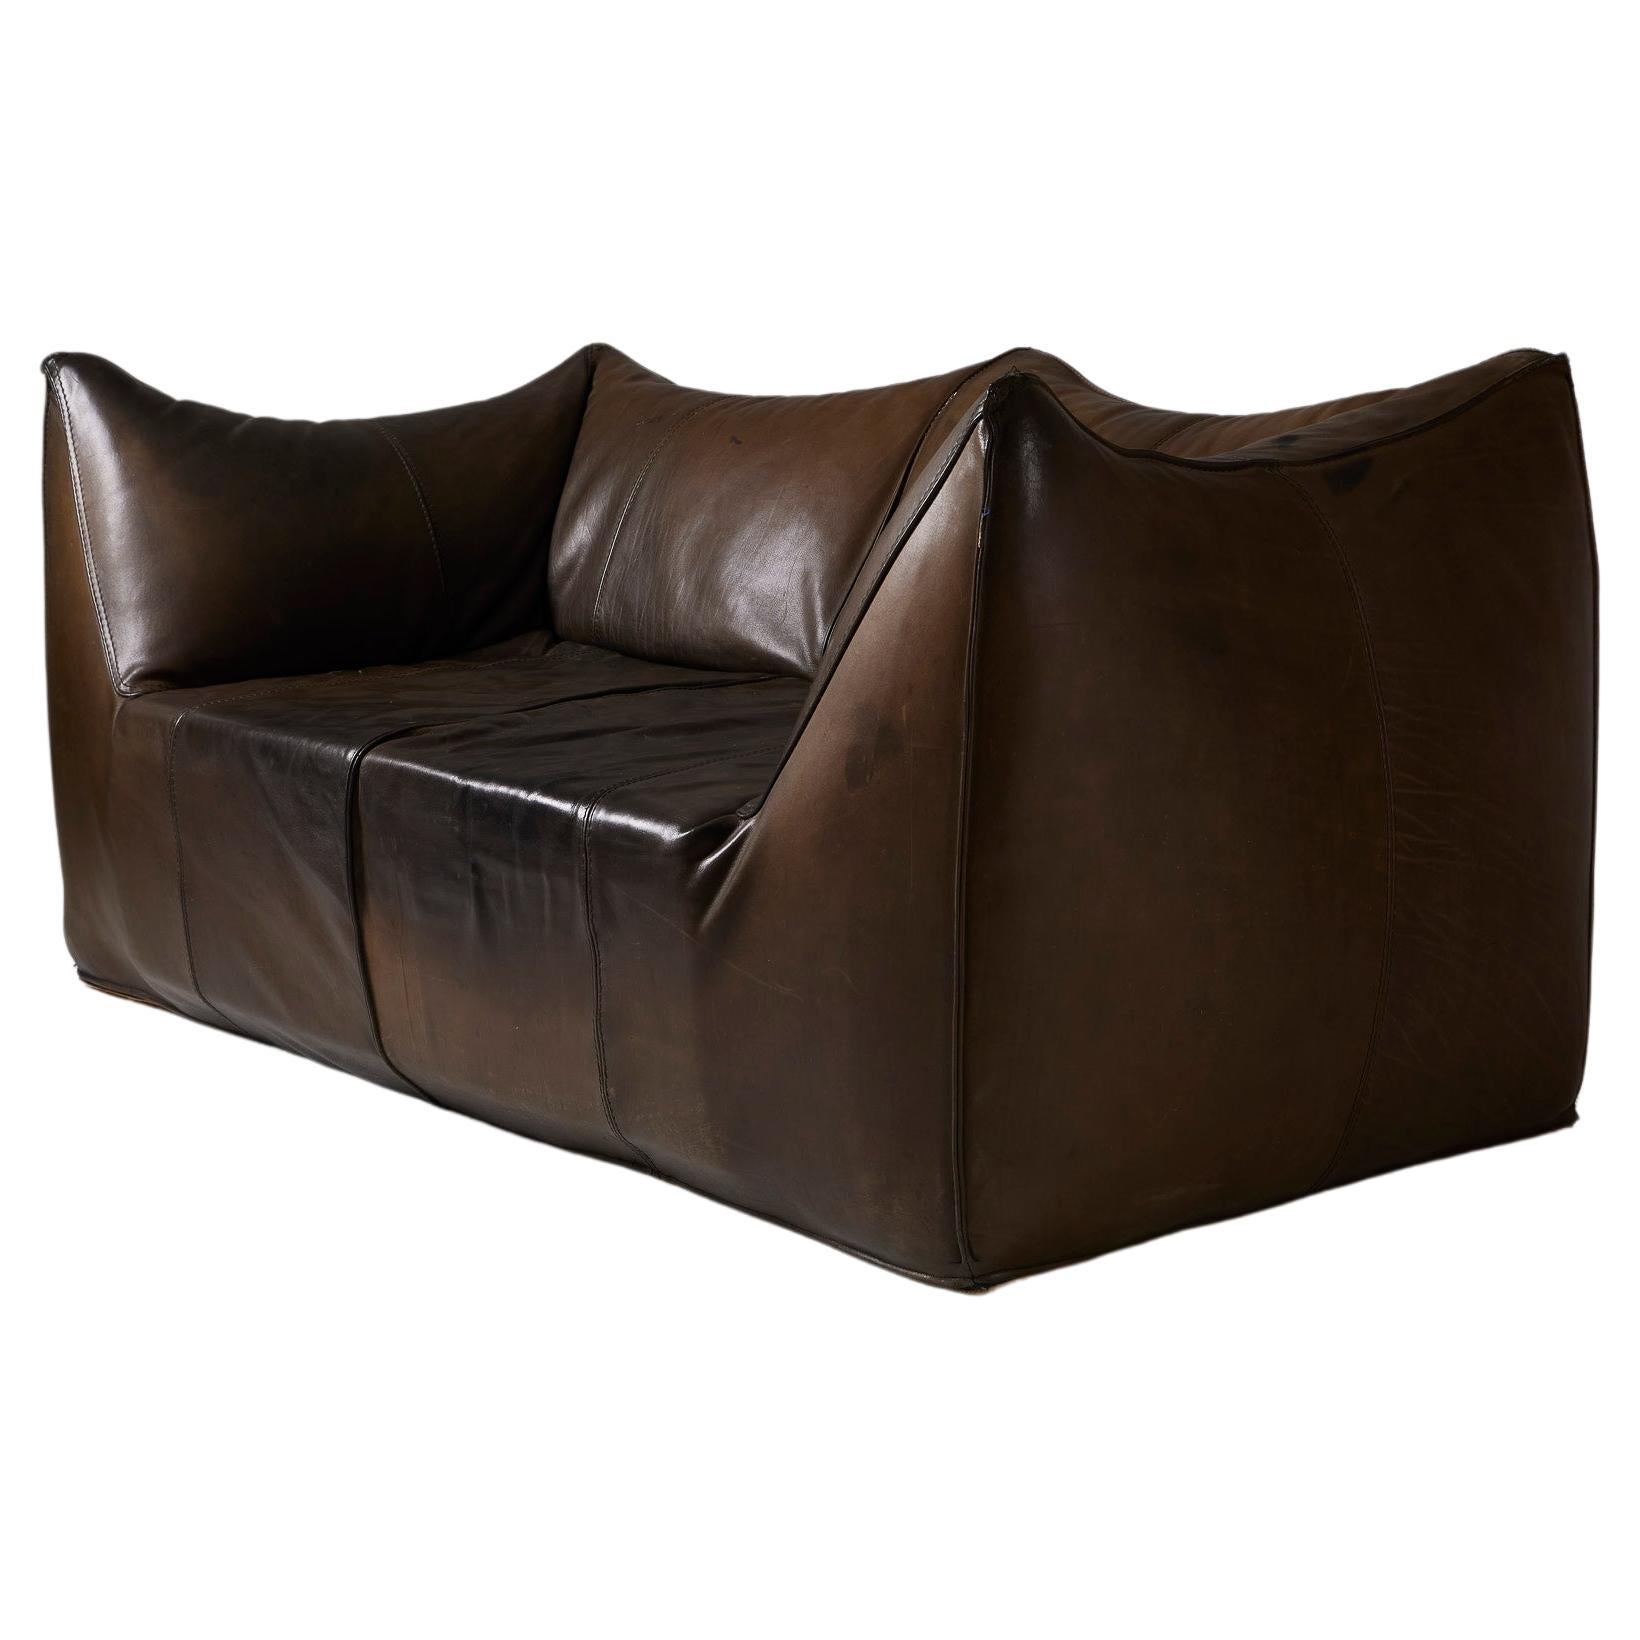 Leather Sofa "Bambole" by Mario Bellini